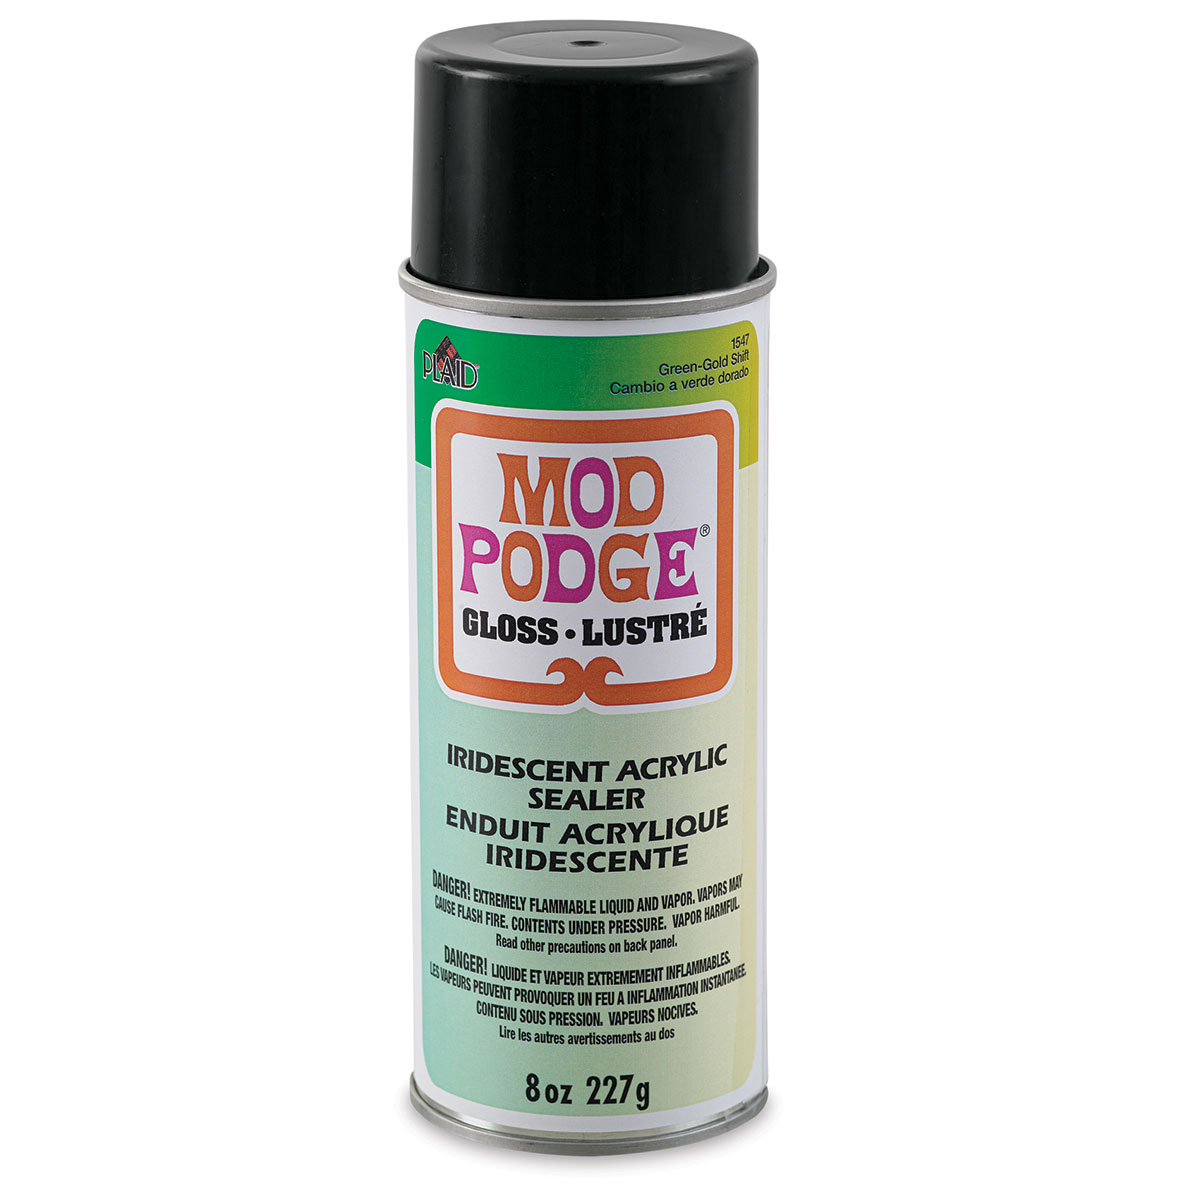 Mod Podge Green to Gold Shift Gloss Iridescent Acrylic Sealer - 8 oz